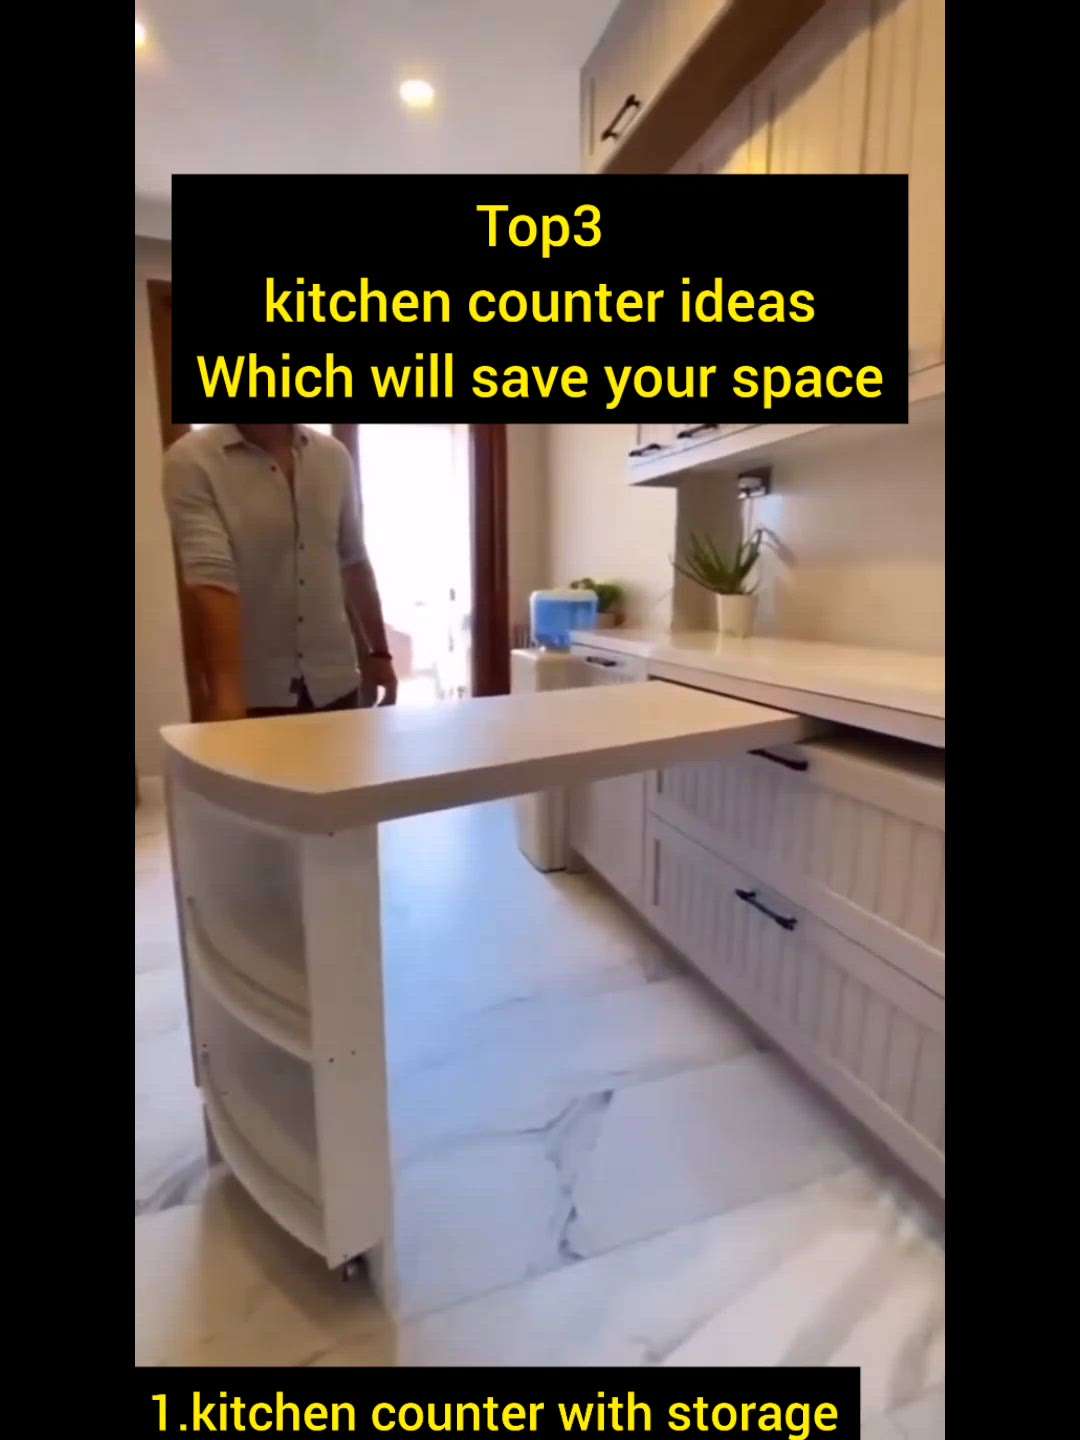 #creatorsofkolo #top3 #kitchenideas #modernhomes #ideas #kitchen
#kitchencountertops #kitchencounter #KitchenRenovation #KitchenIdeas #KitchenTable #SmallKitchen #viral #trendig